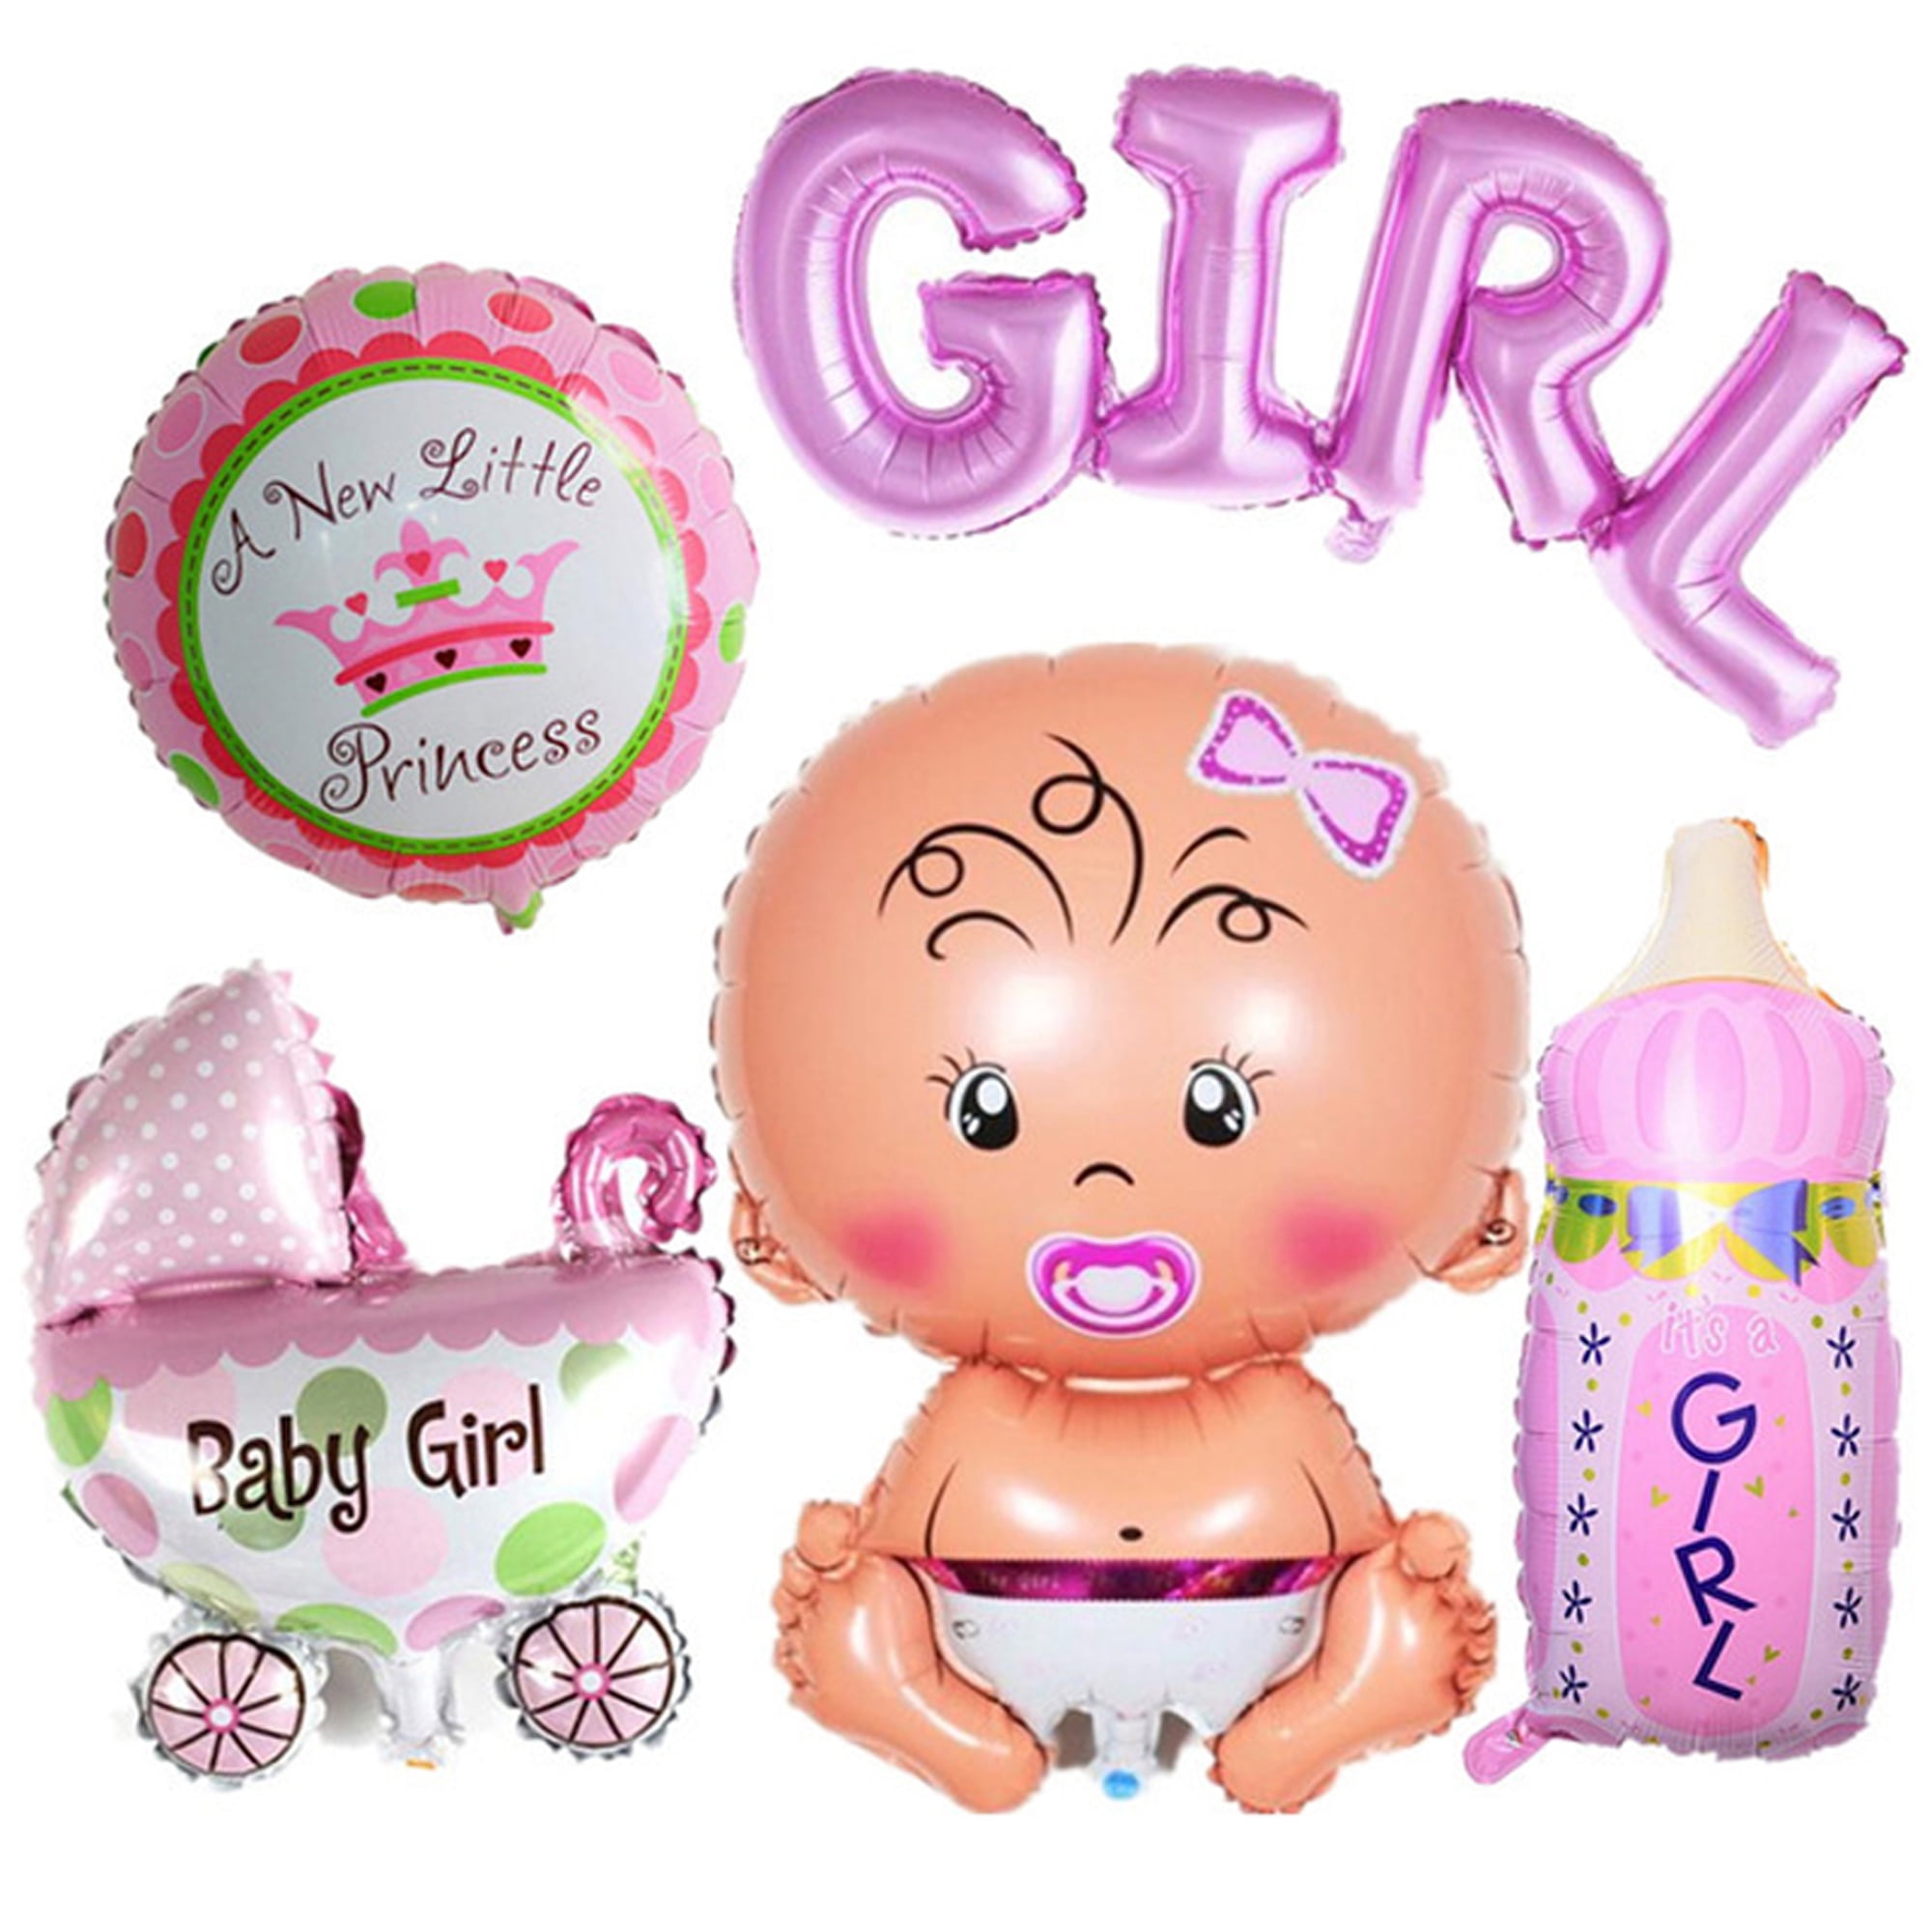 Details about   Baby Shower Party Gender Reveal Girl/Boy Newborn Birthday Foil Balloon Set Decor 